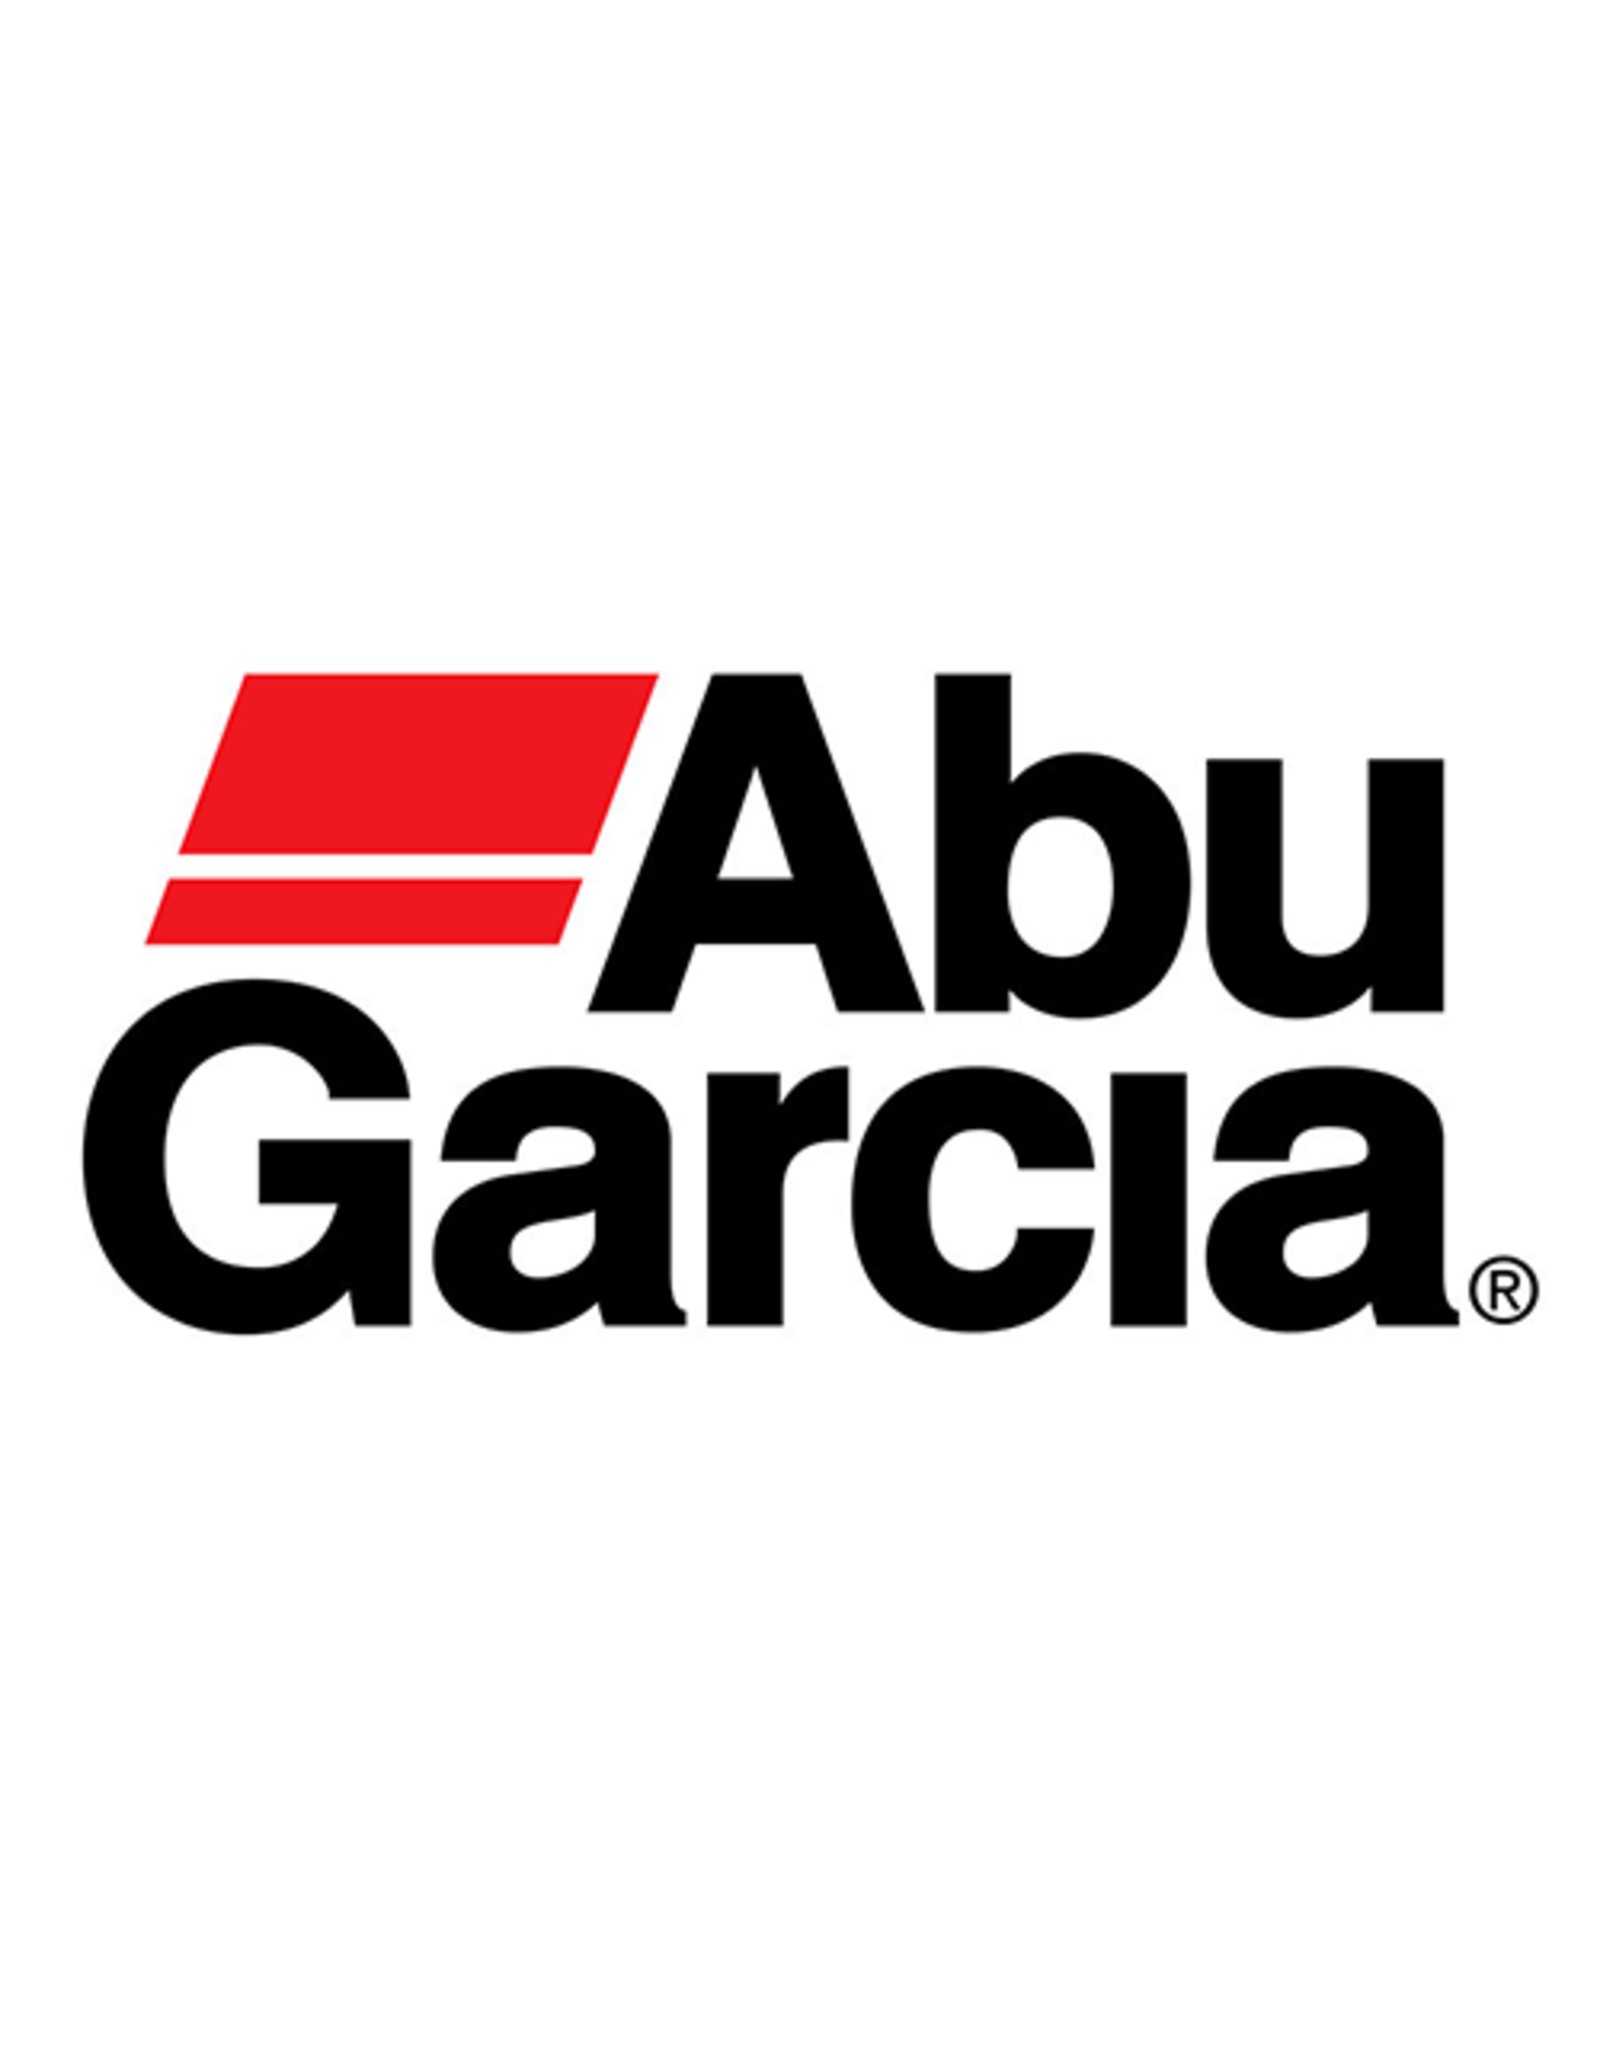 Abu Garcia 50998  BELL COVER/NLA